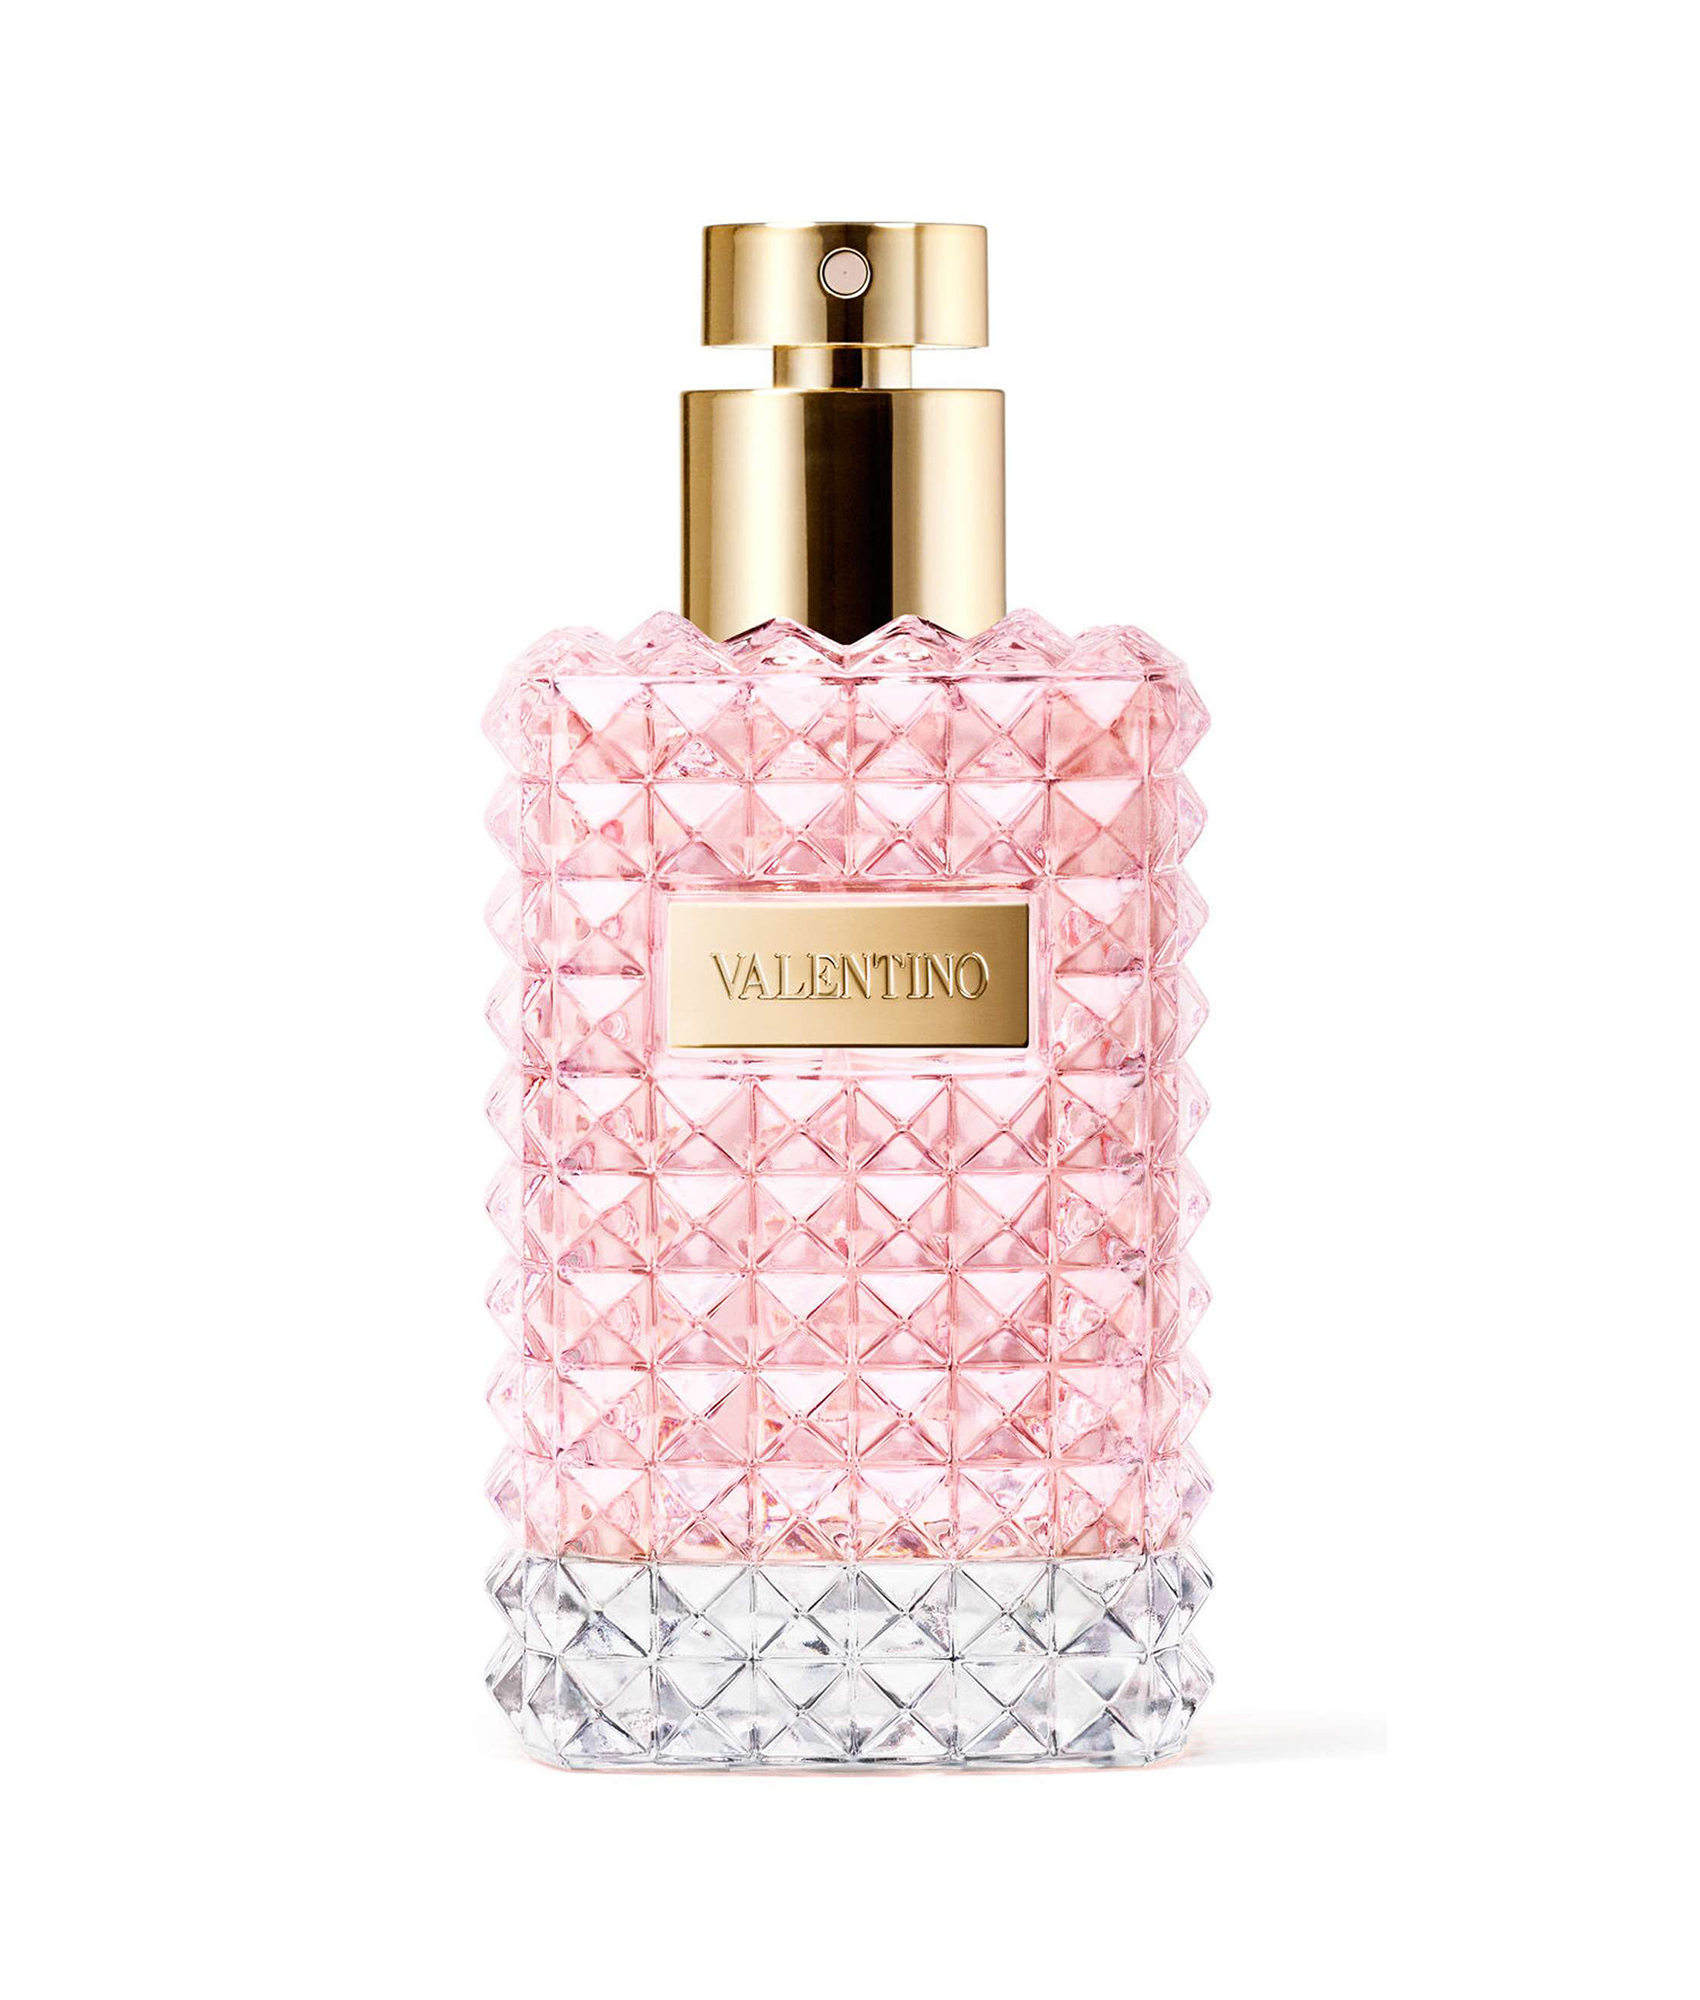 Designer Items Worth The Splurge | Valentino Donna Perfume | Blondie in the City by Hayley Larue